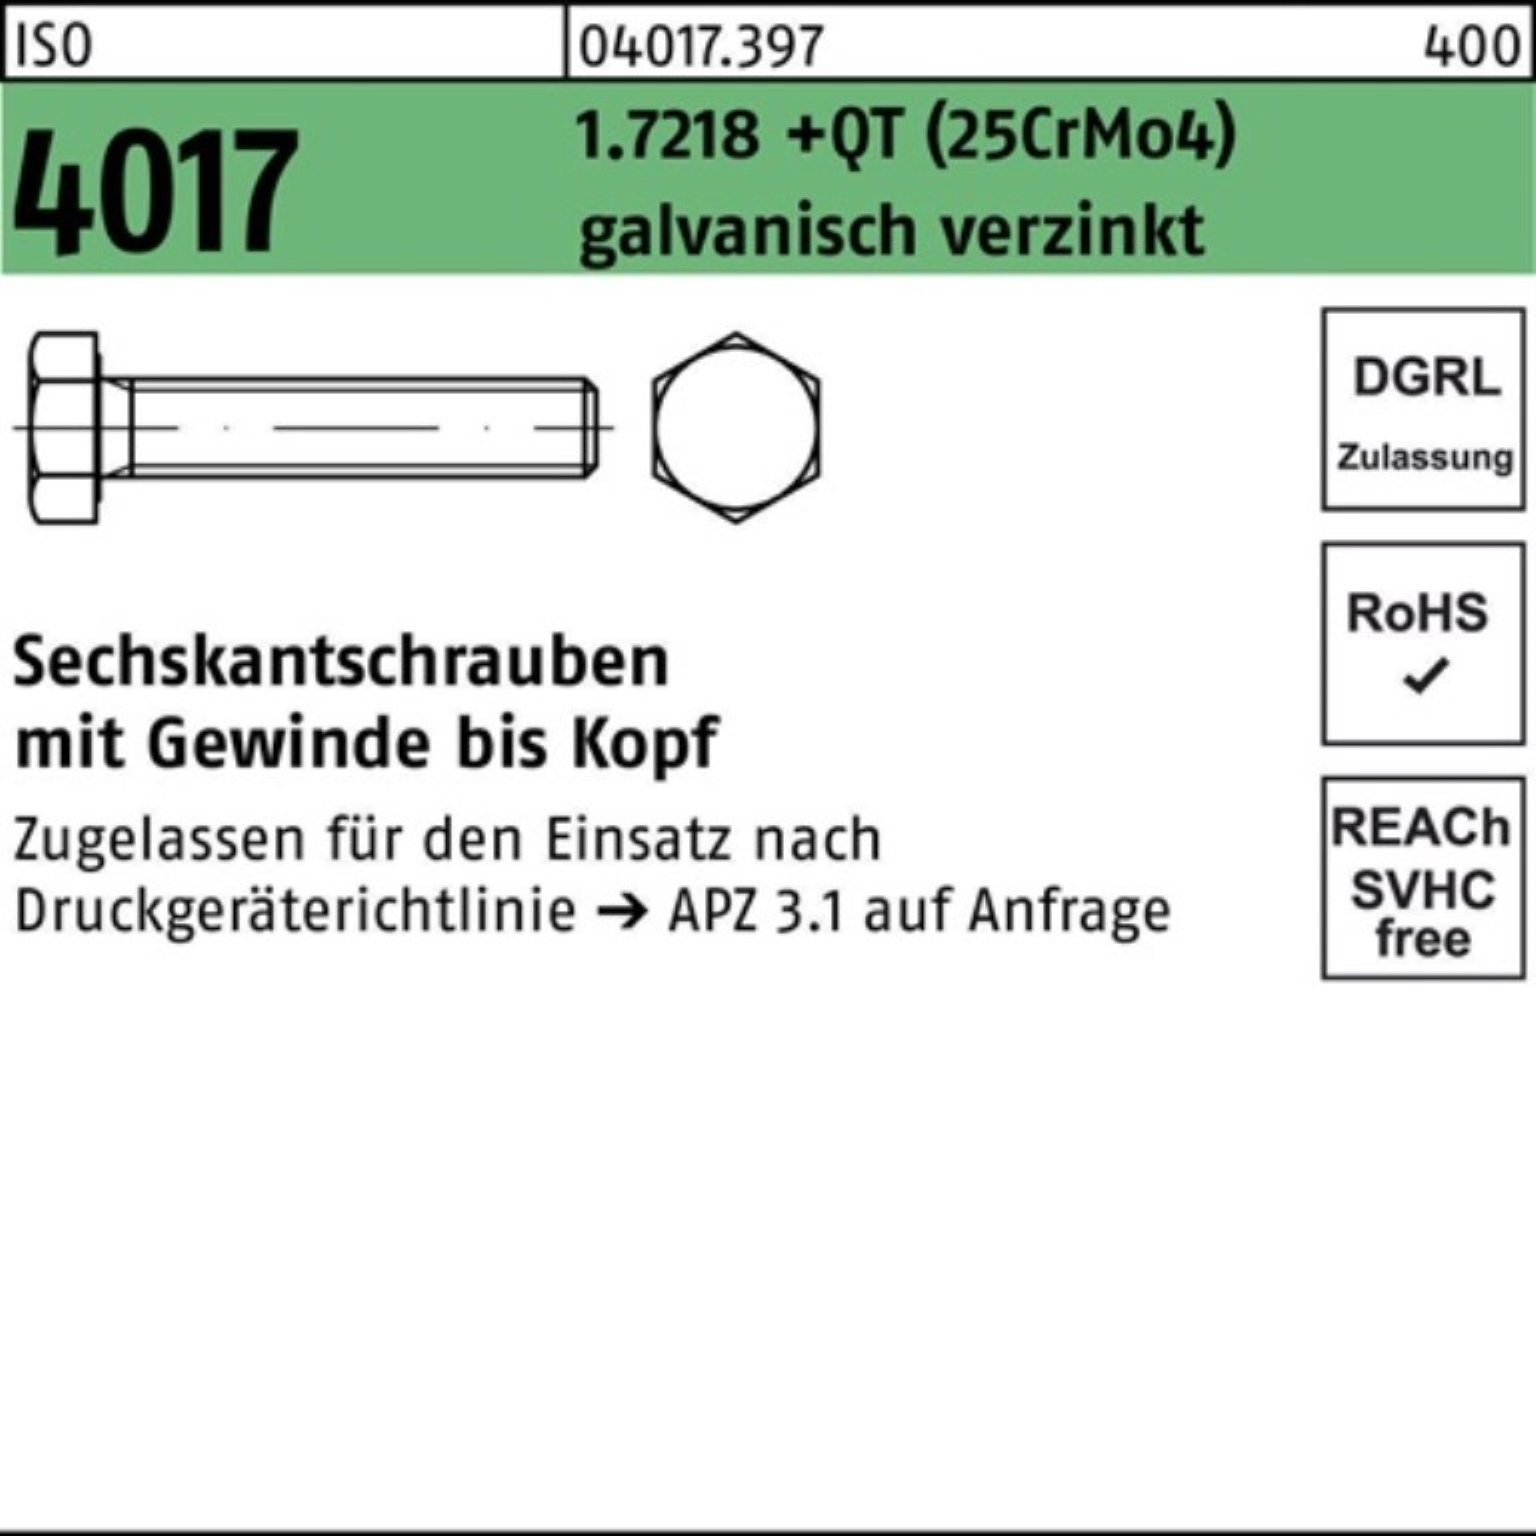 Sechskantschraube VG M30x70 100er Pack +QT 1.7218 Sechskantschraube 4017 Bufab g (25CrMo4) ISO